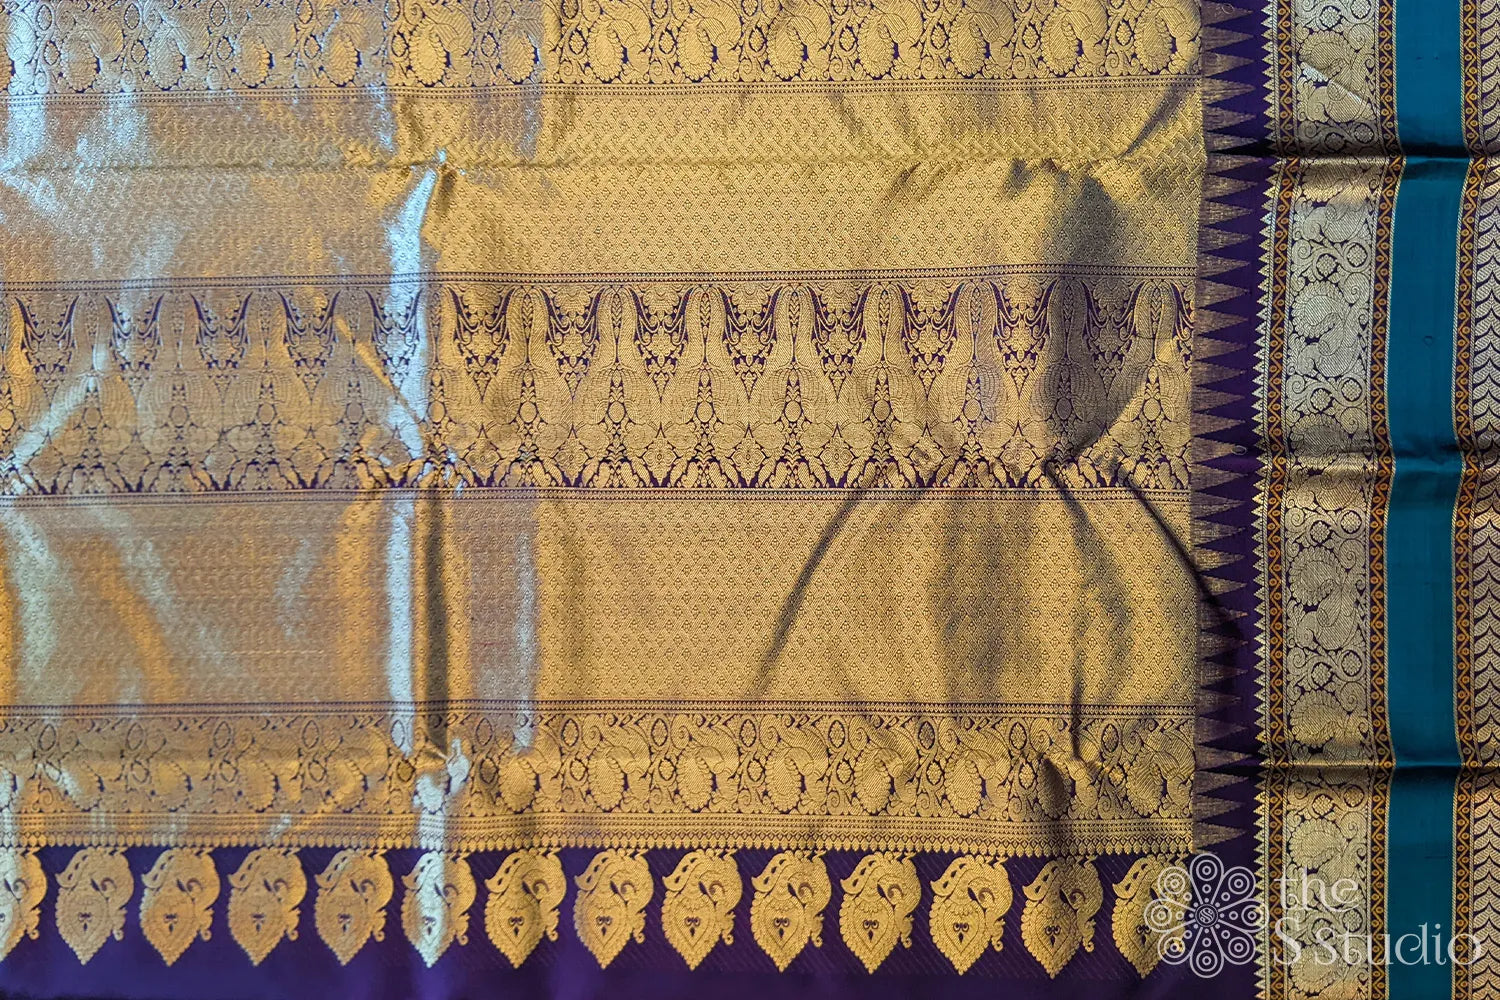 Cream korvai Kanchipuram silk saree with brown border